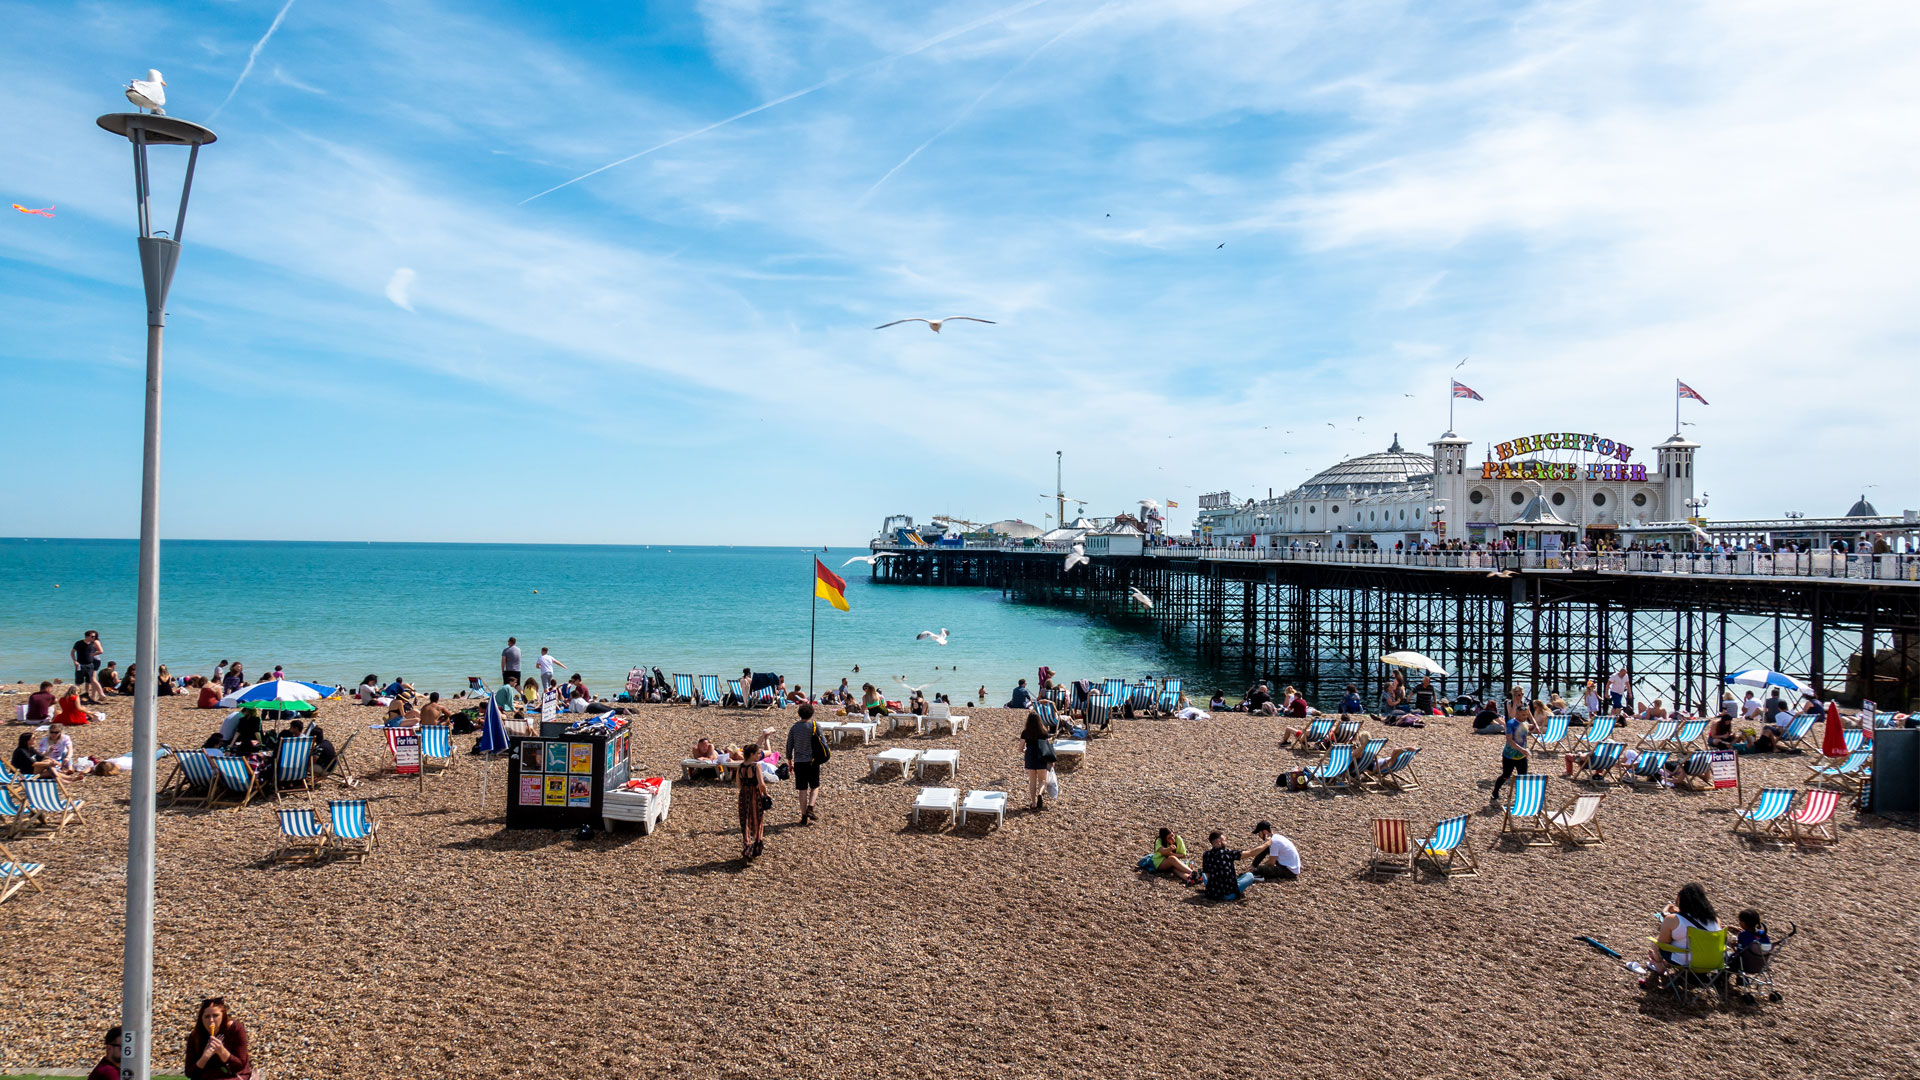 The history of Brighton's Pier